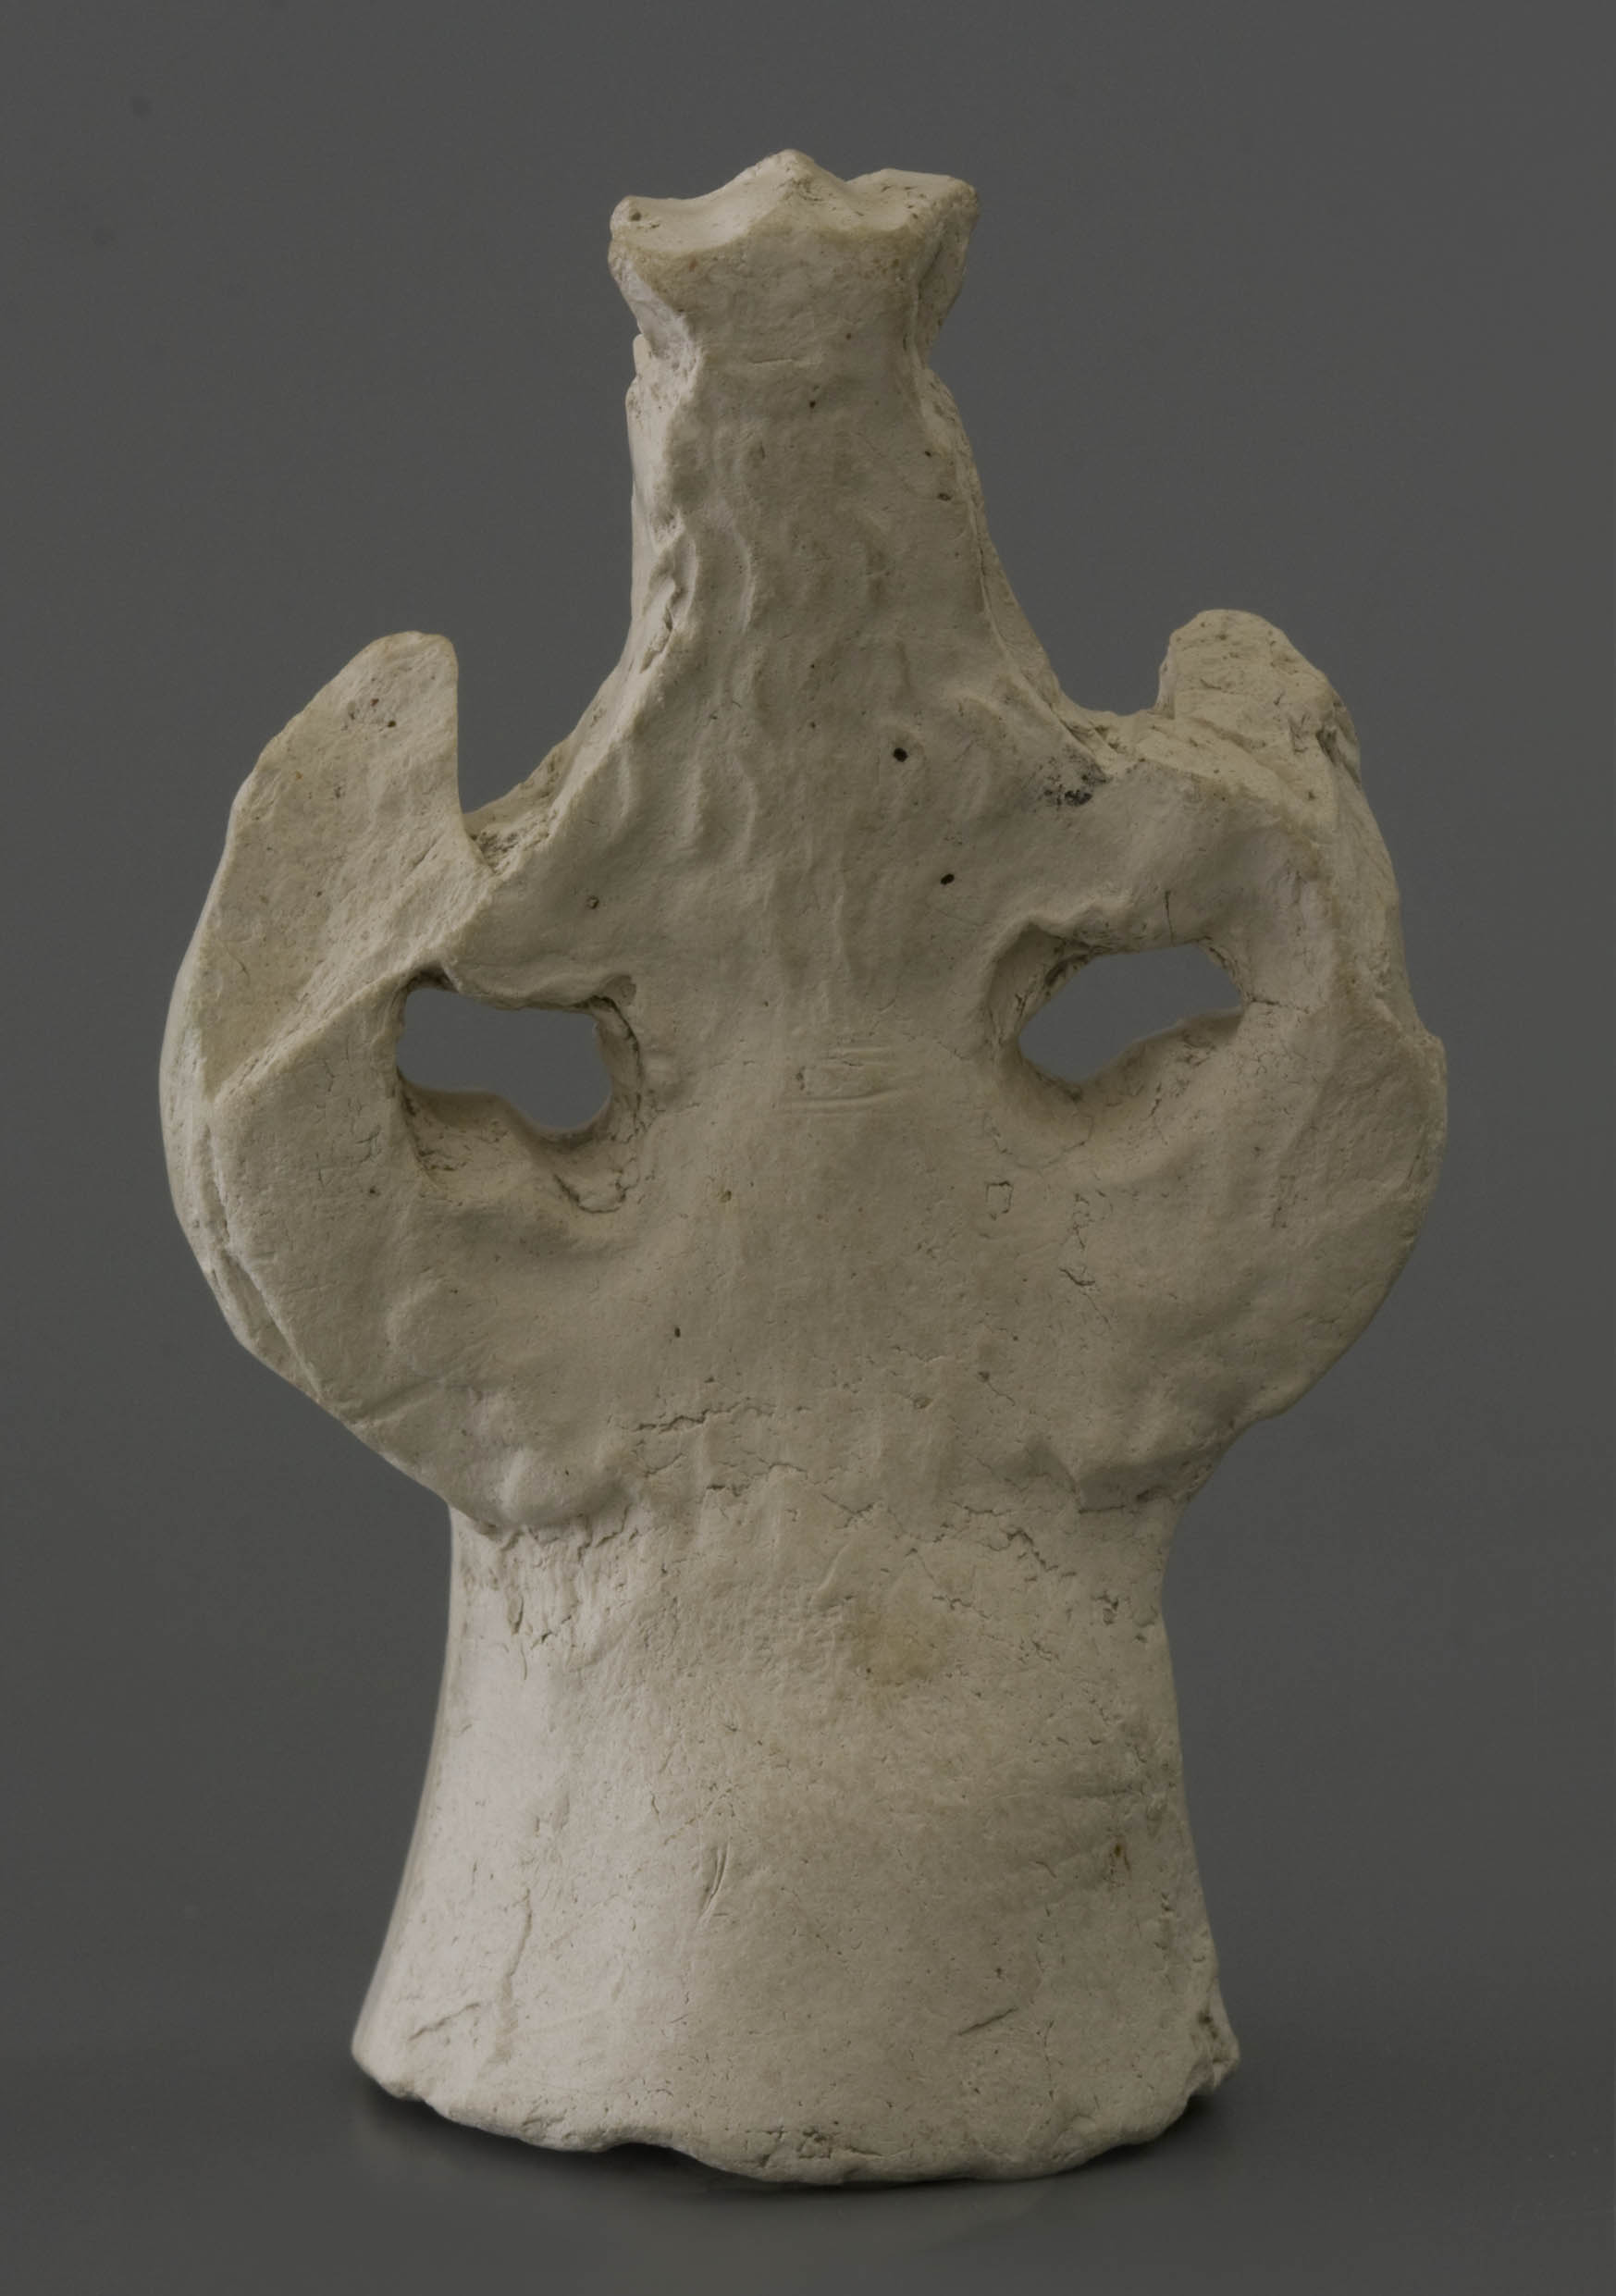 04-17.354-pipeclay-figurine-woman-2